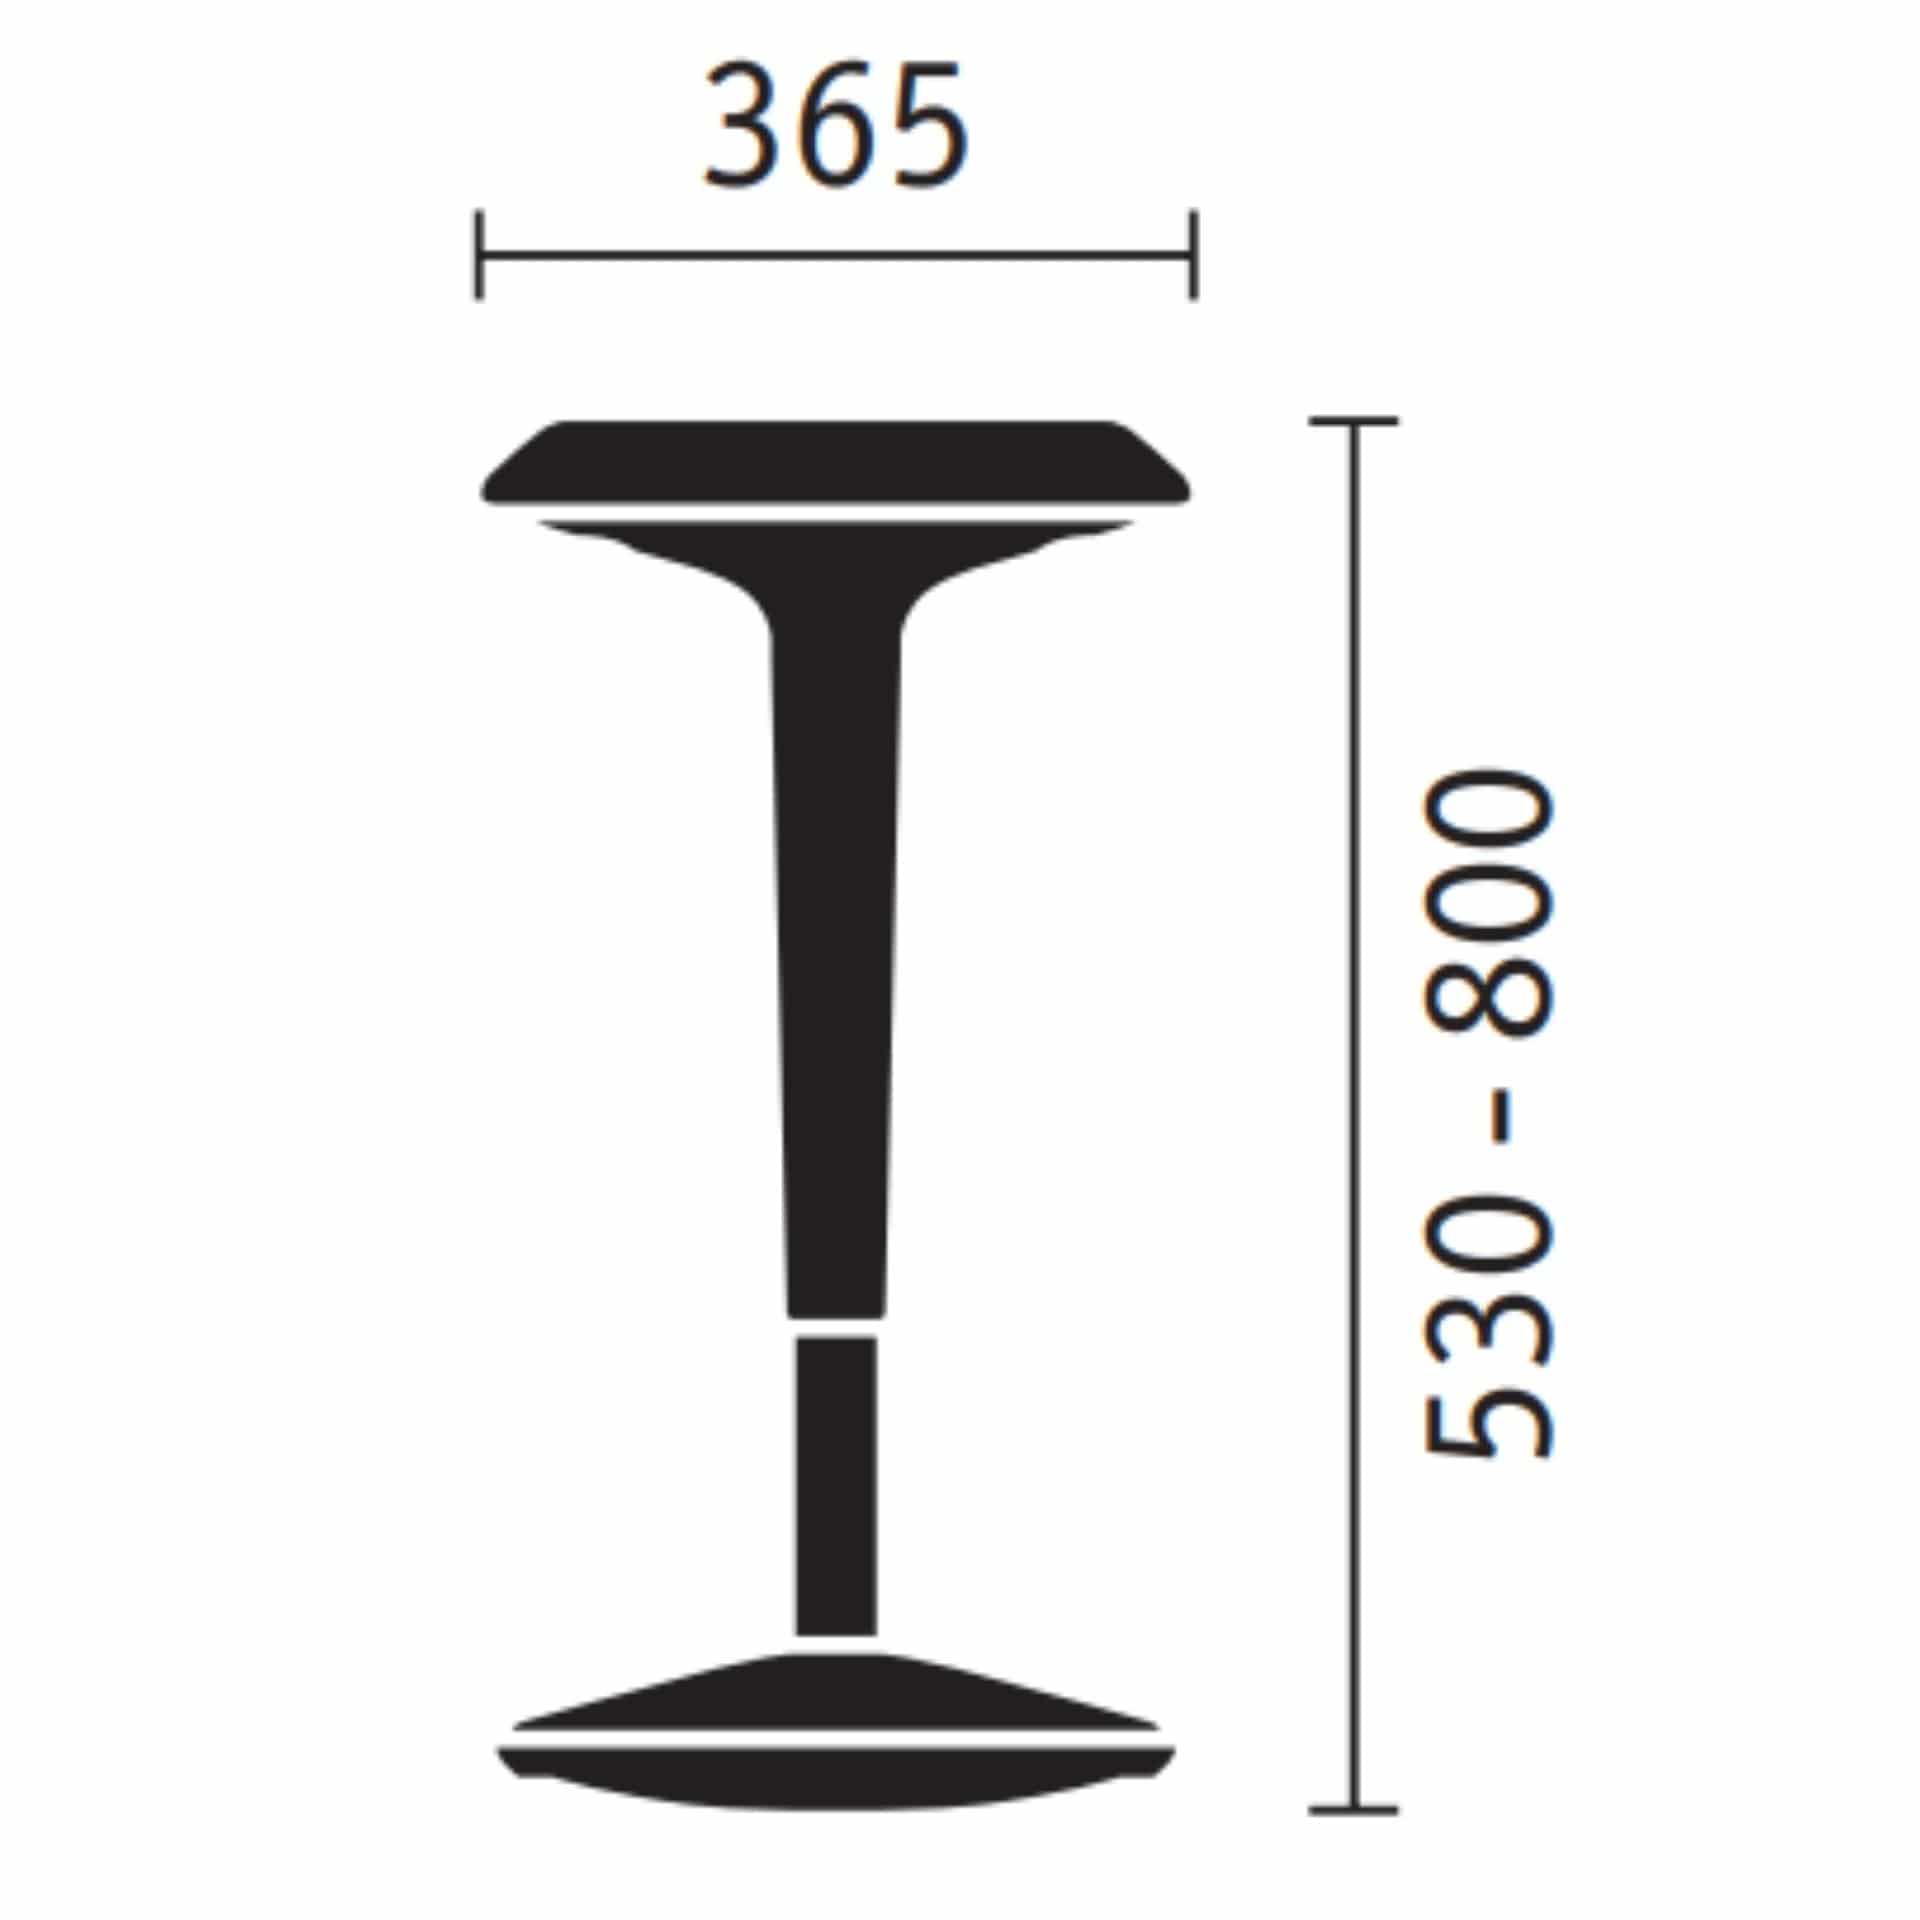 Measurement Image